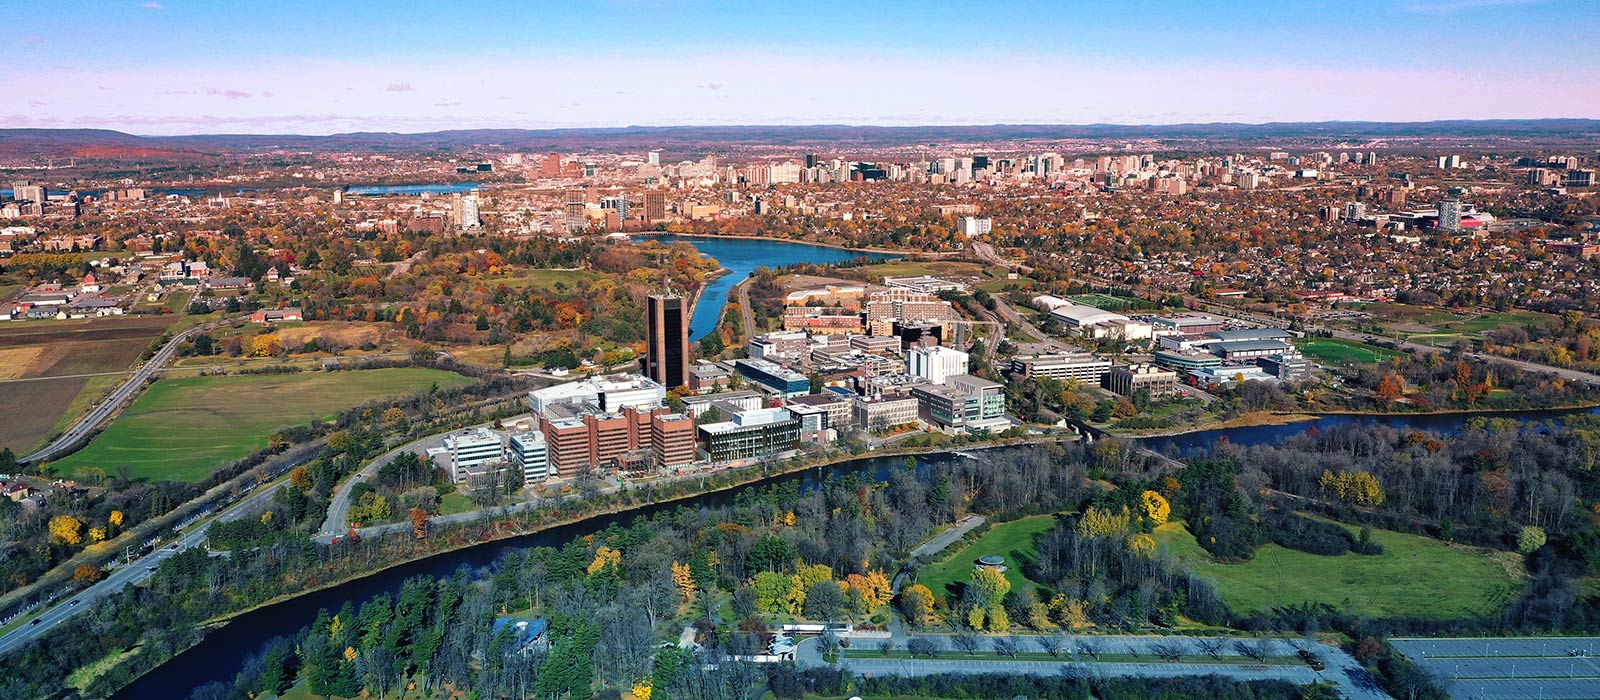 Aerial view of Carleton University - Sept. 2020